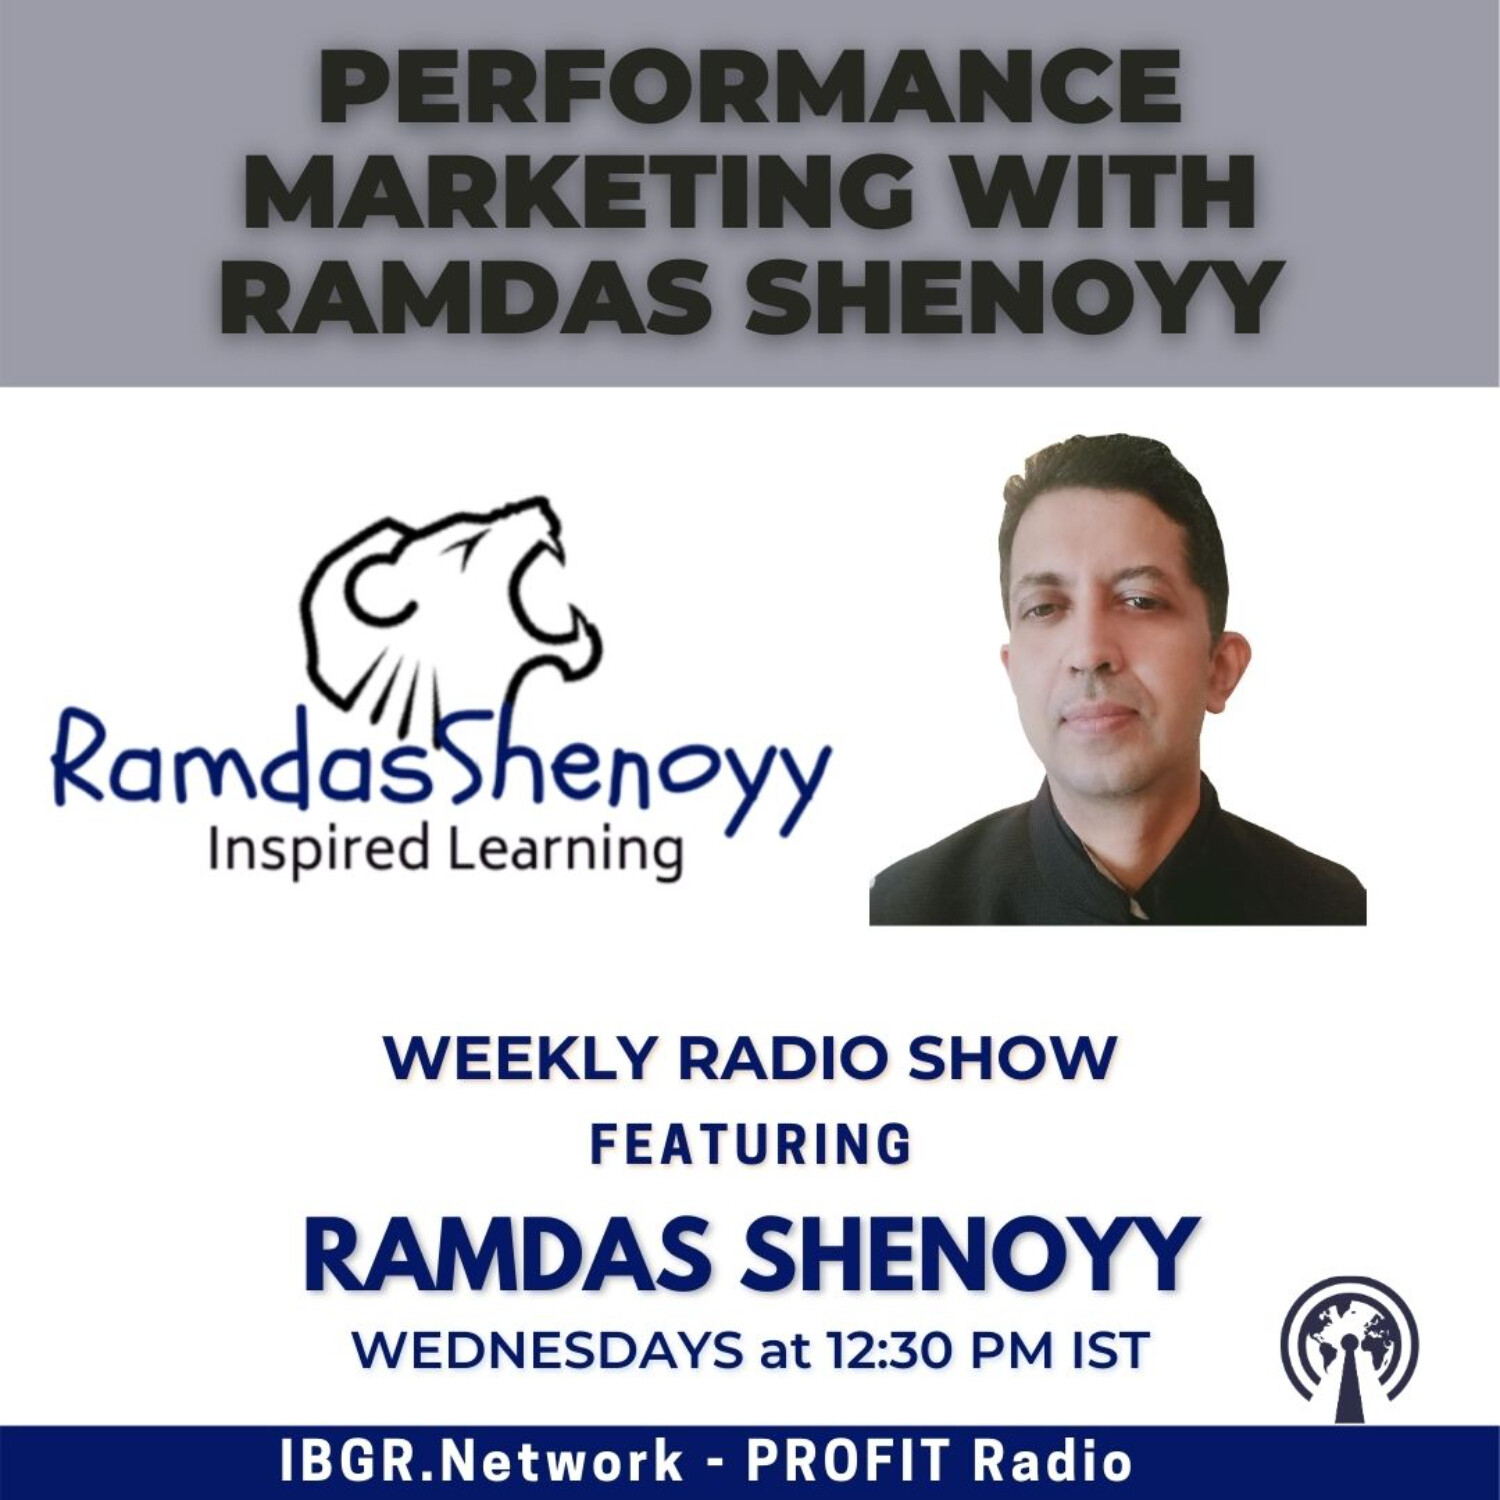 Performance Marketing with Ramdas Shenoyy